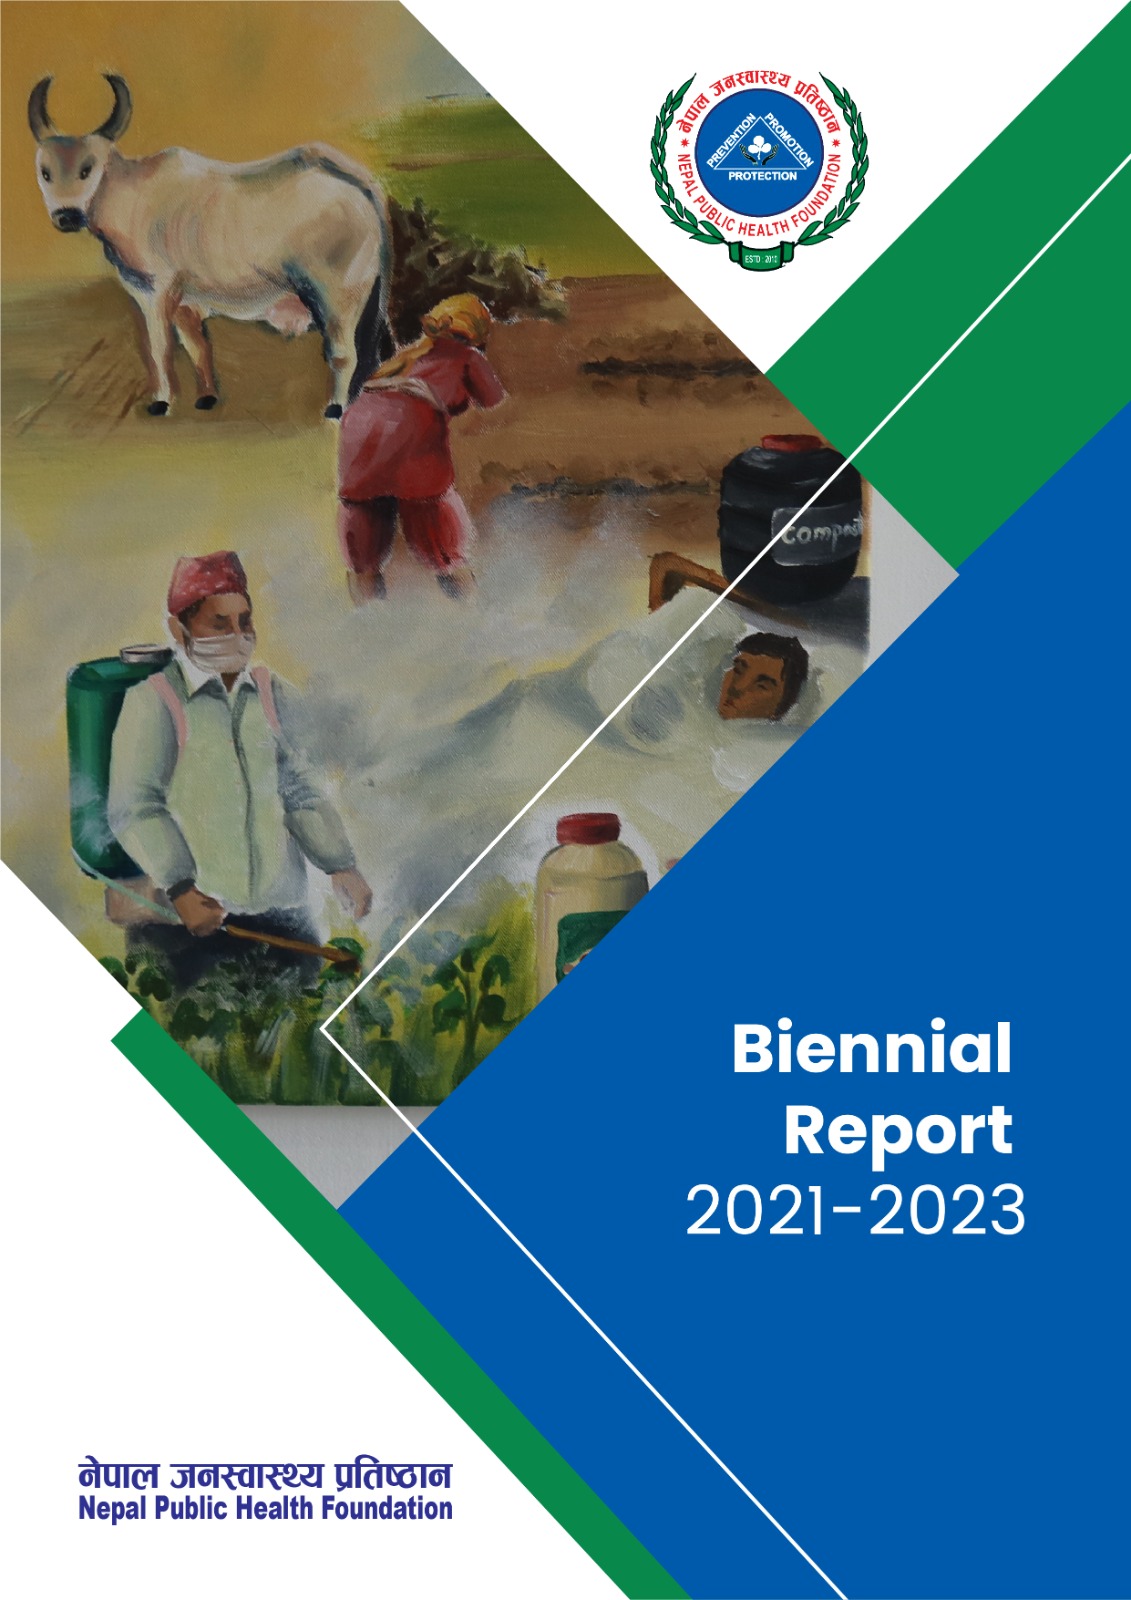 BIENNIAL REPORT OF THE NEPAL PUBLIC HEALTH FOUNDATION (2021–23).